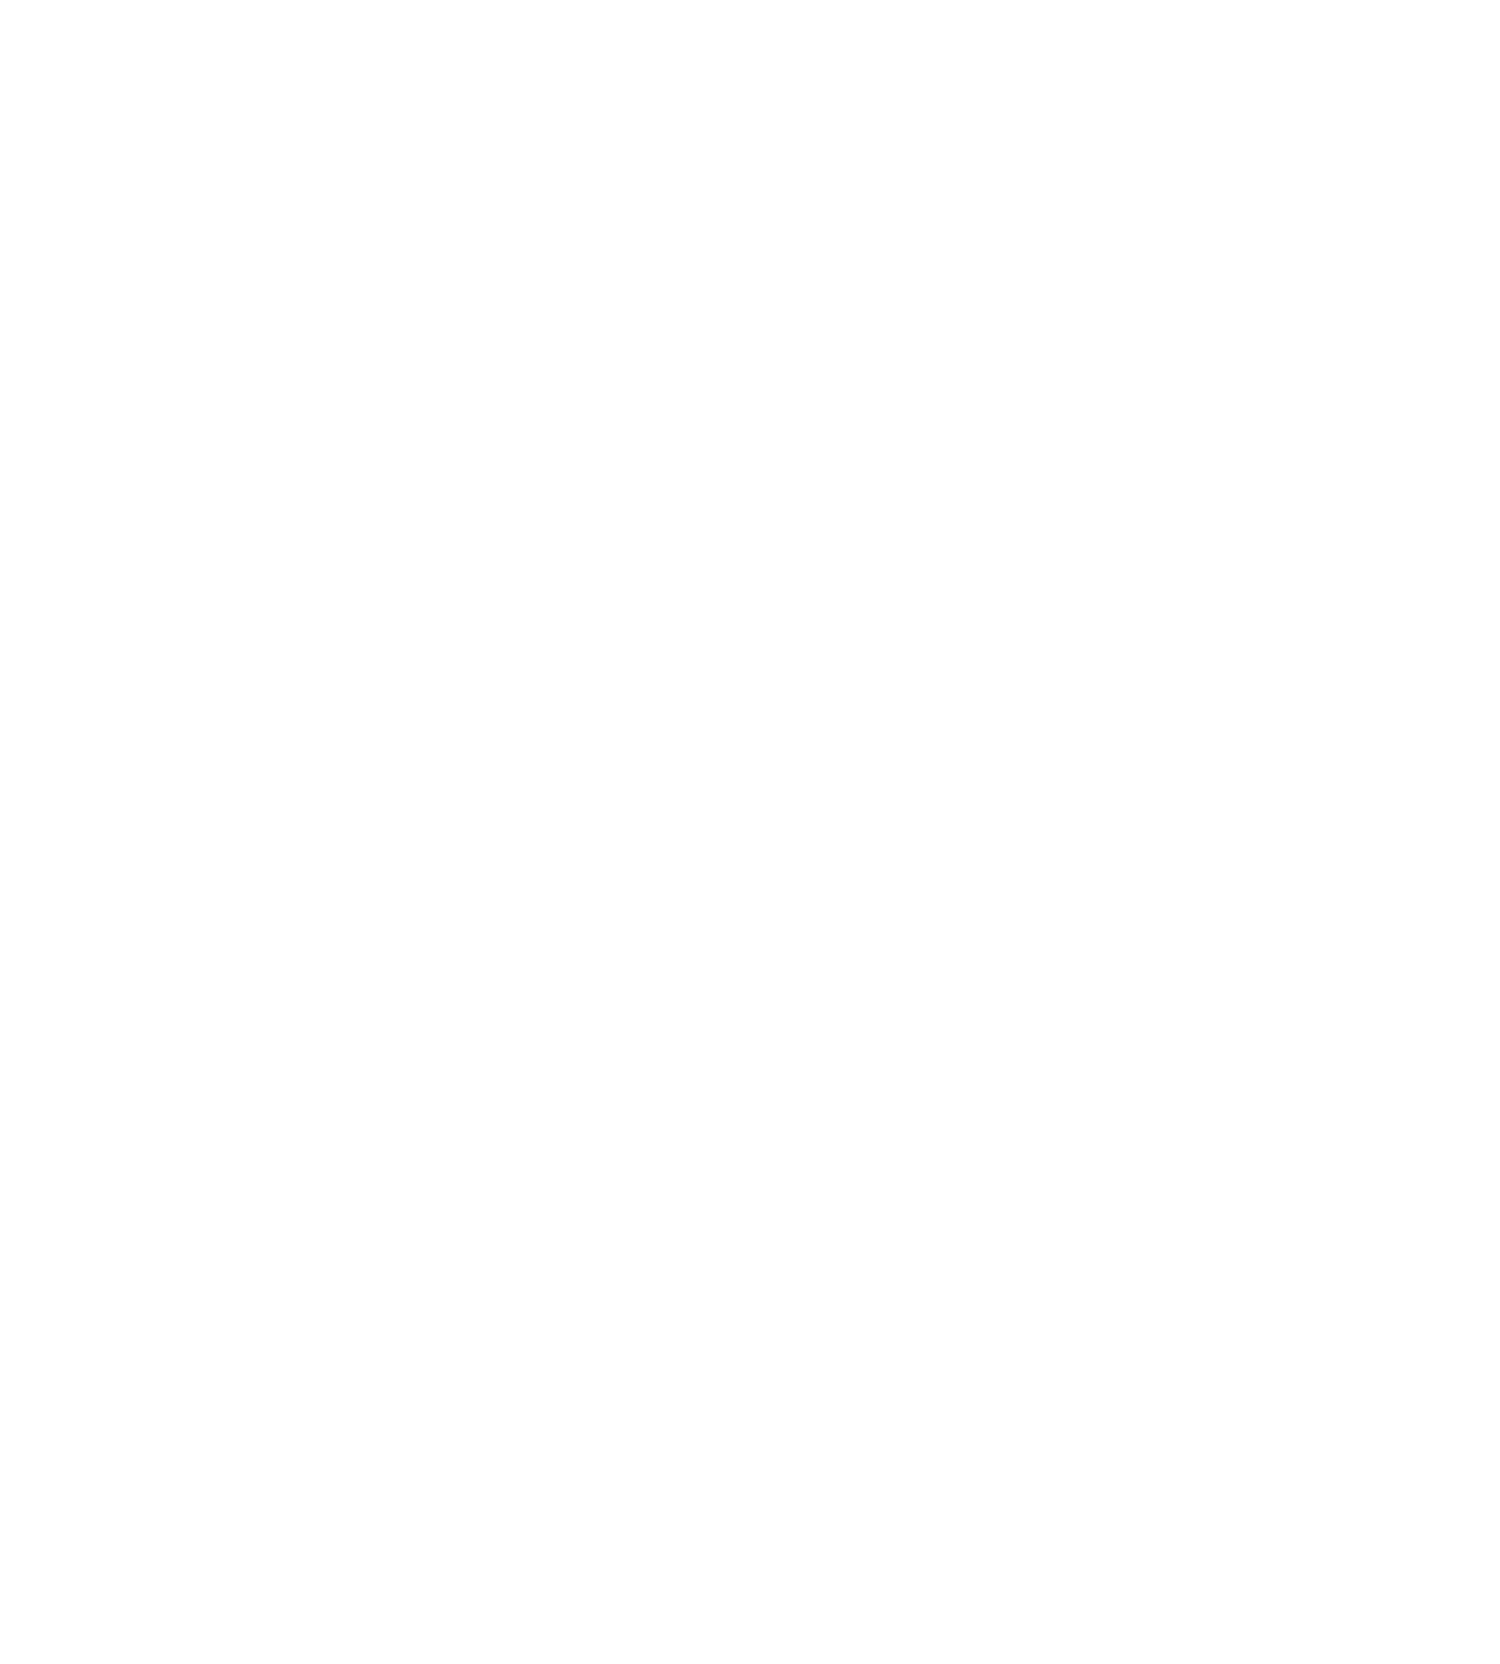 WingspanILM